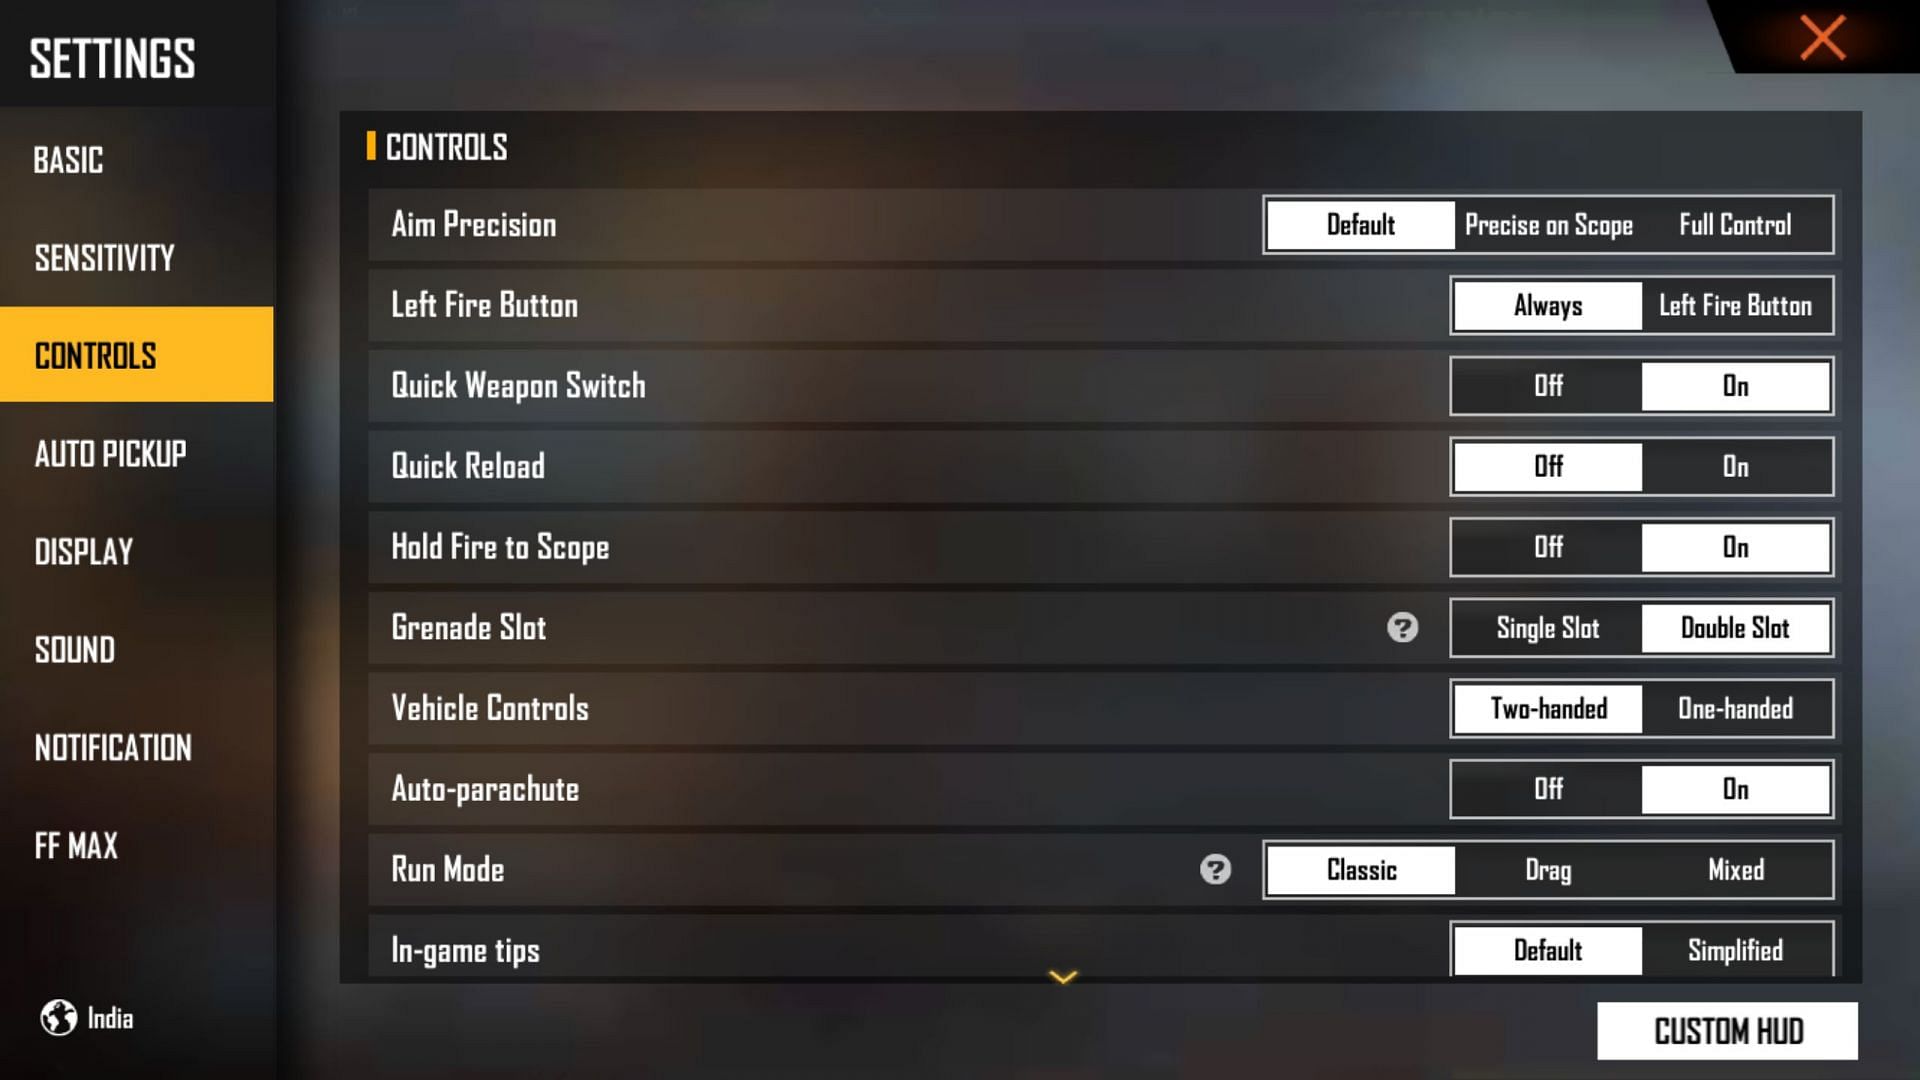 Ideal control settings for players (Image via Garena)